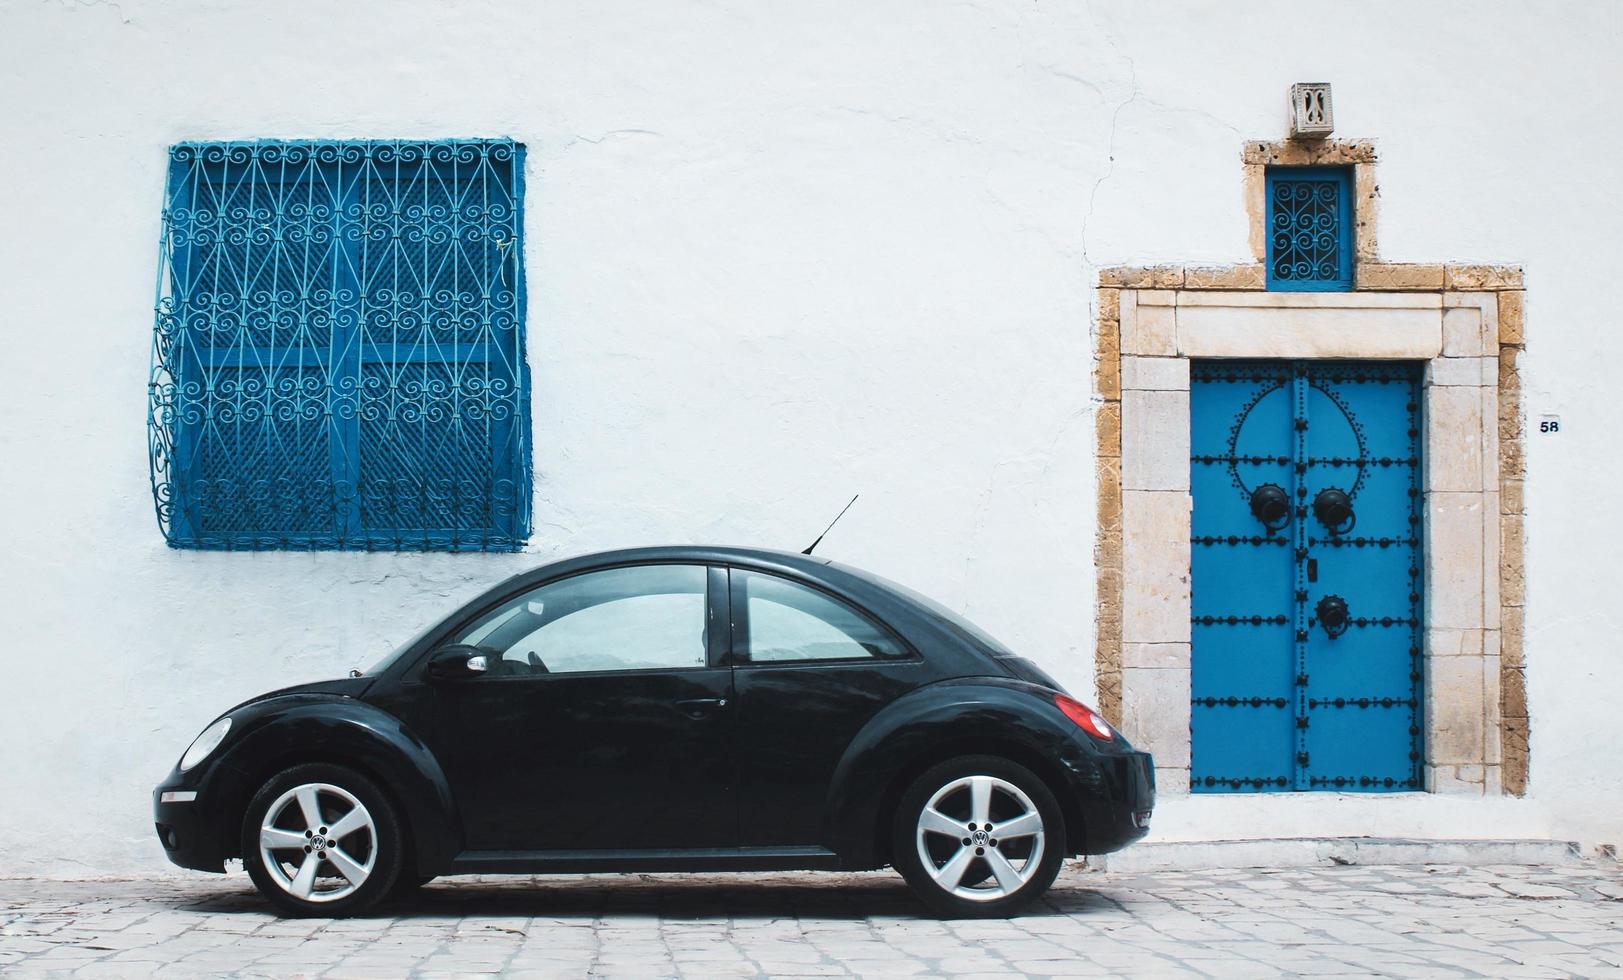 Sidi Bou Said, Tunesië, 2020 - Zwarte keverauto dichtbij huis foto